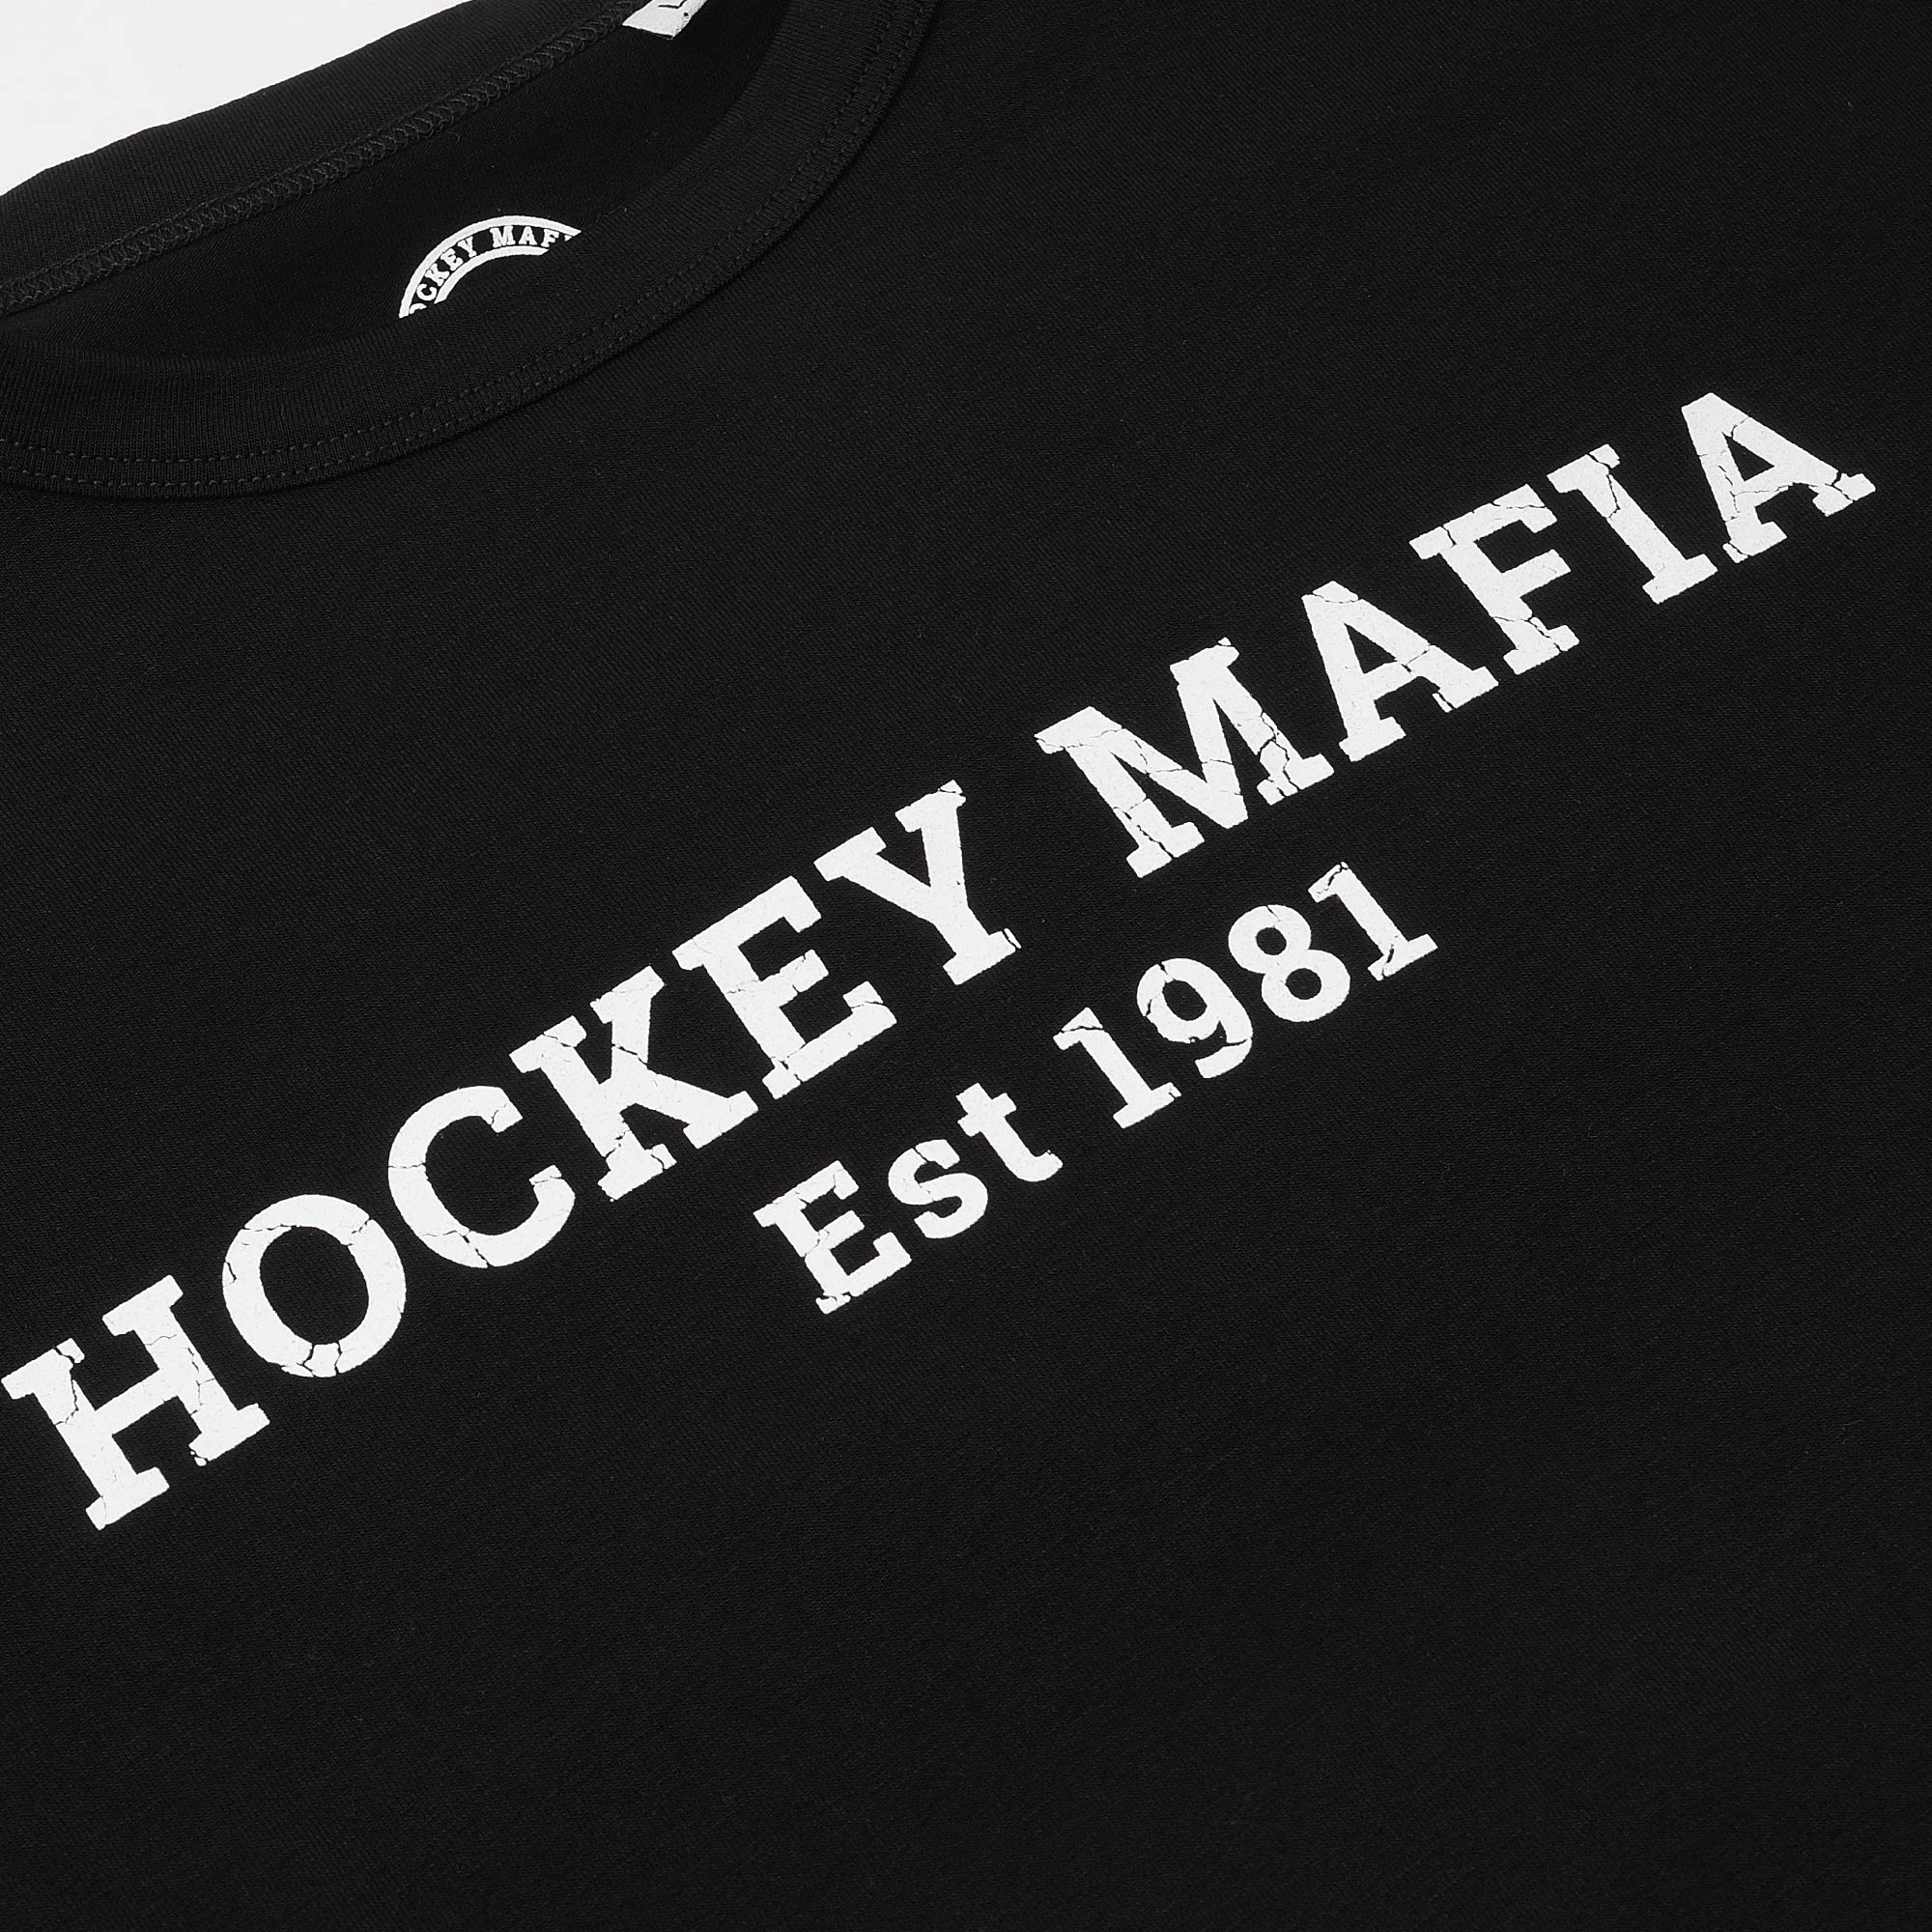 Футболка мужская "Hockey Mafia. Est 1981" черная